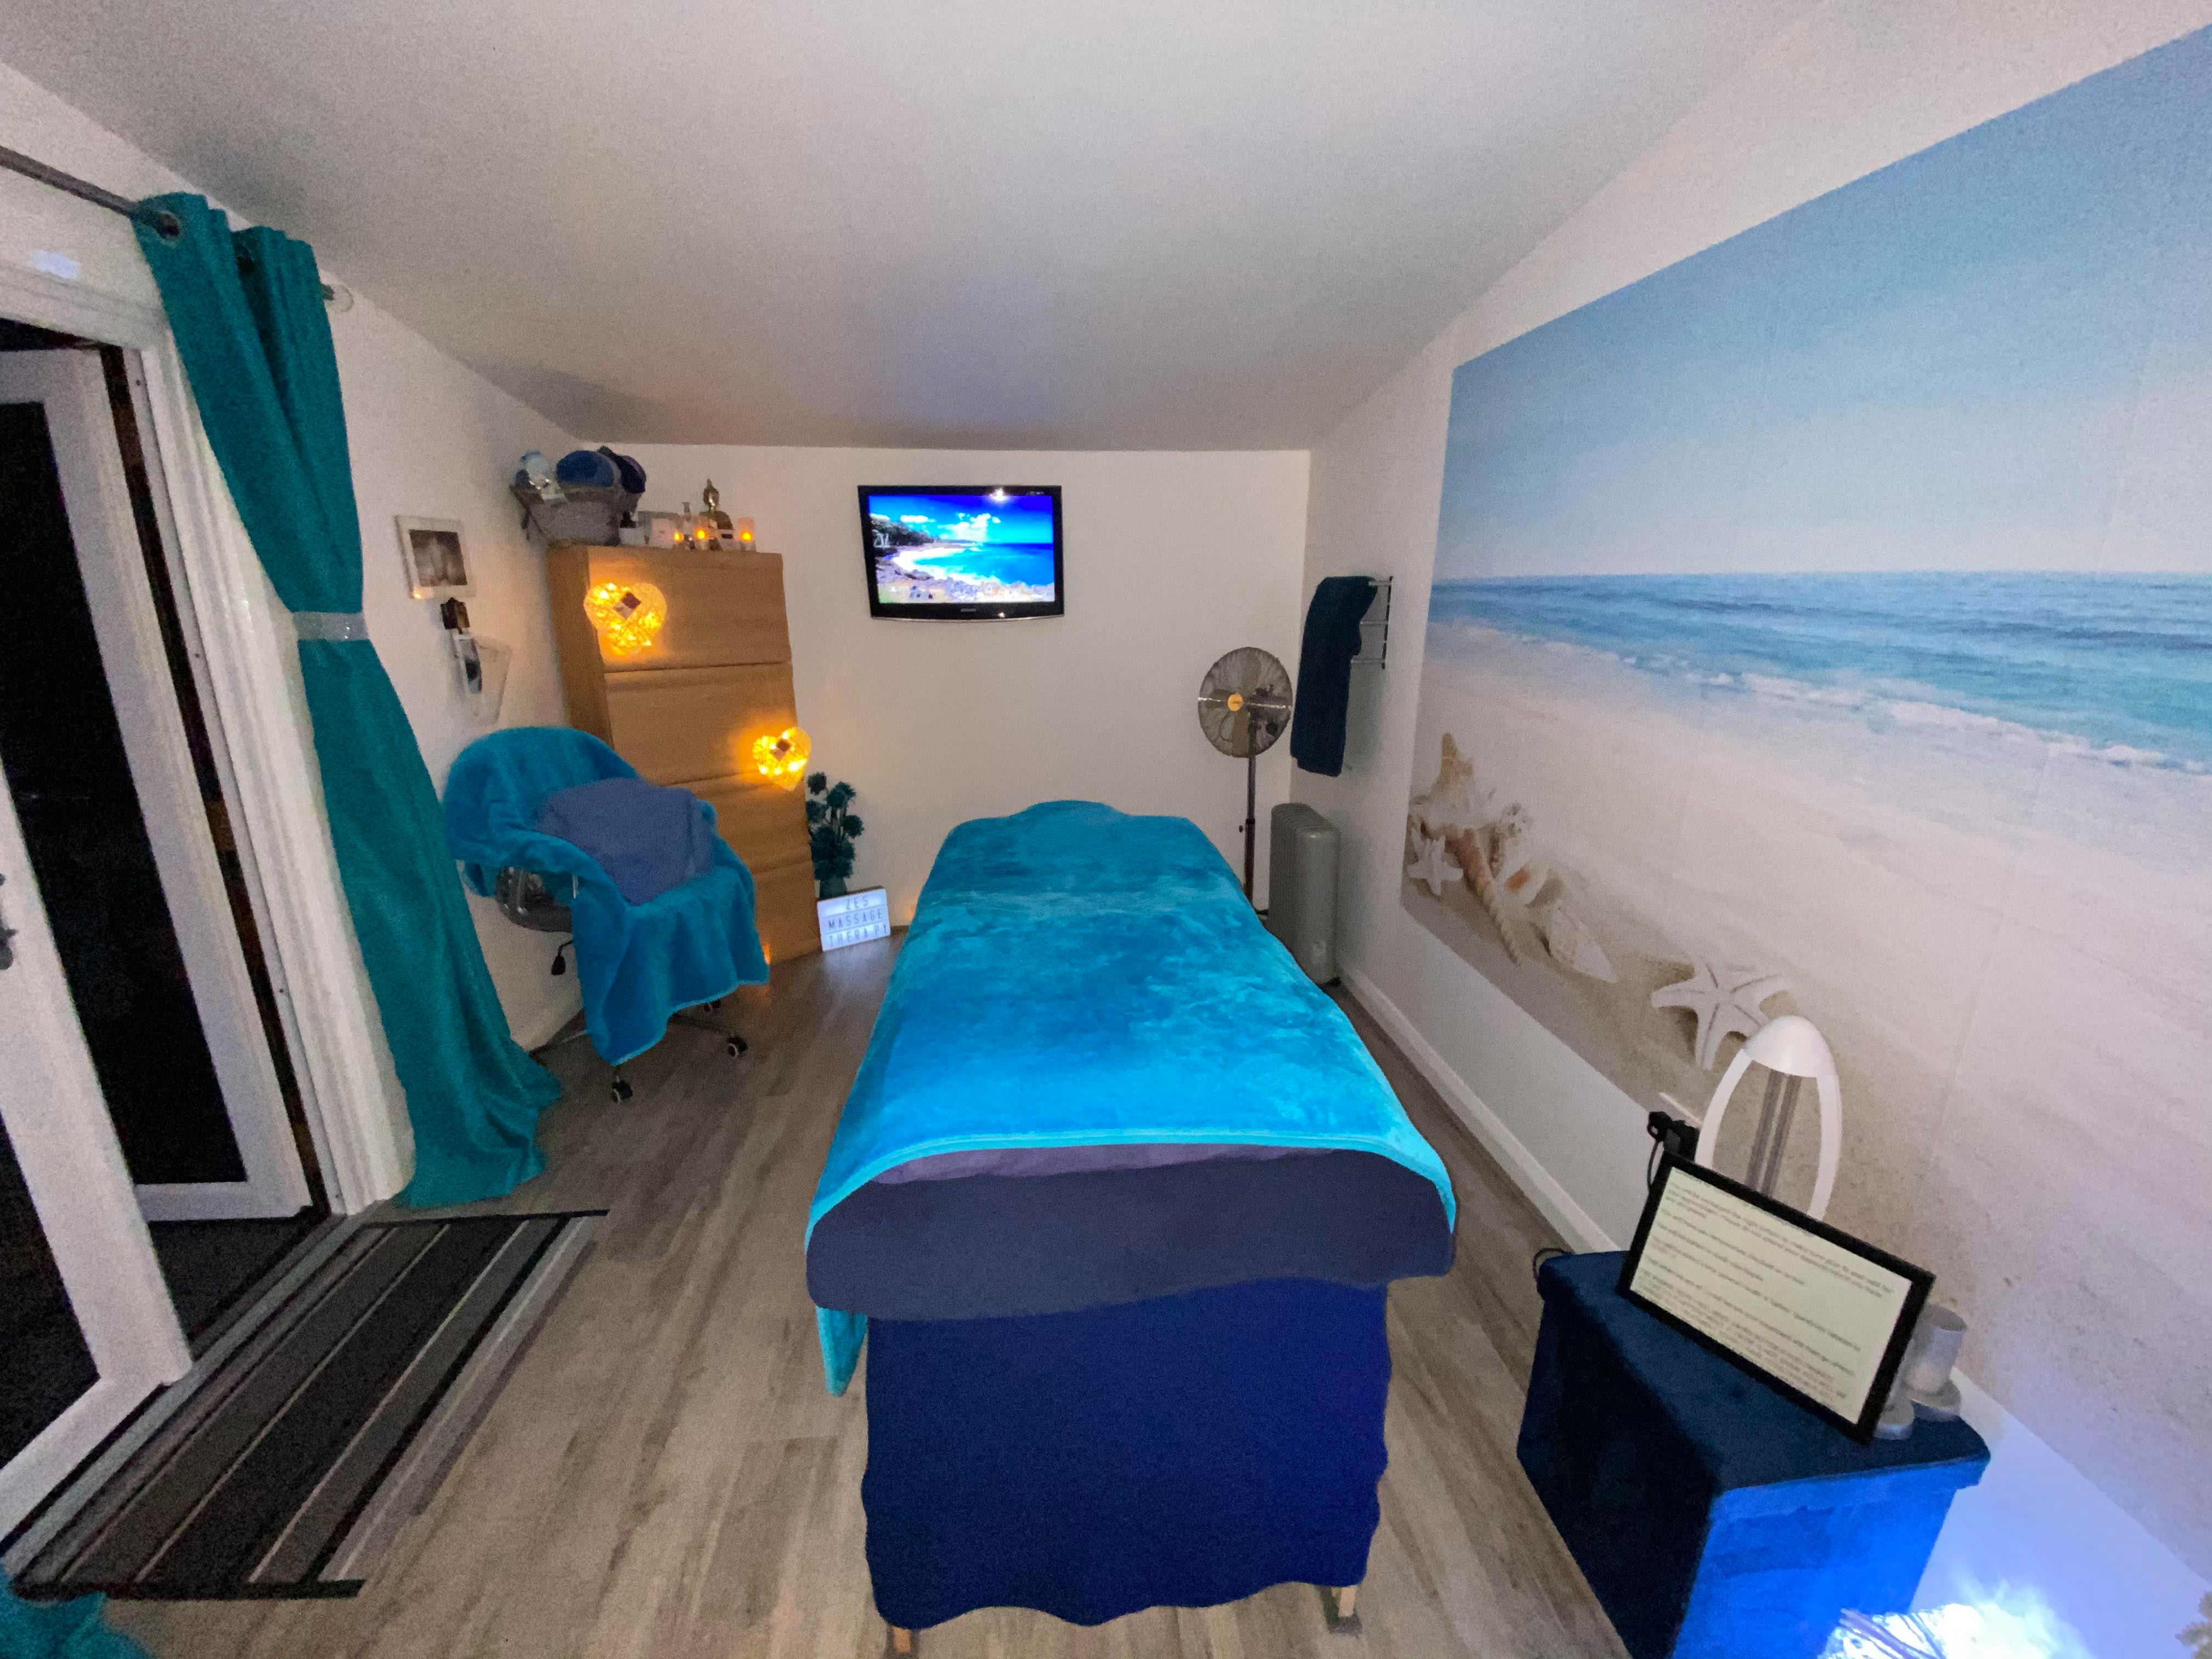 Zena Massage Therapy Room